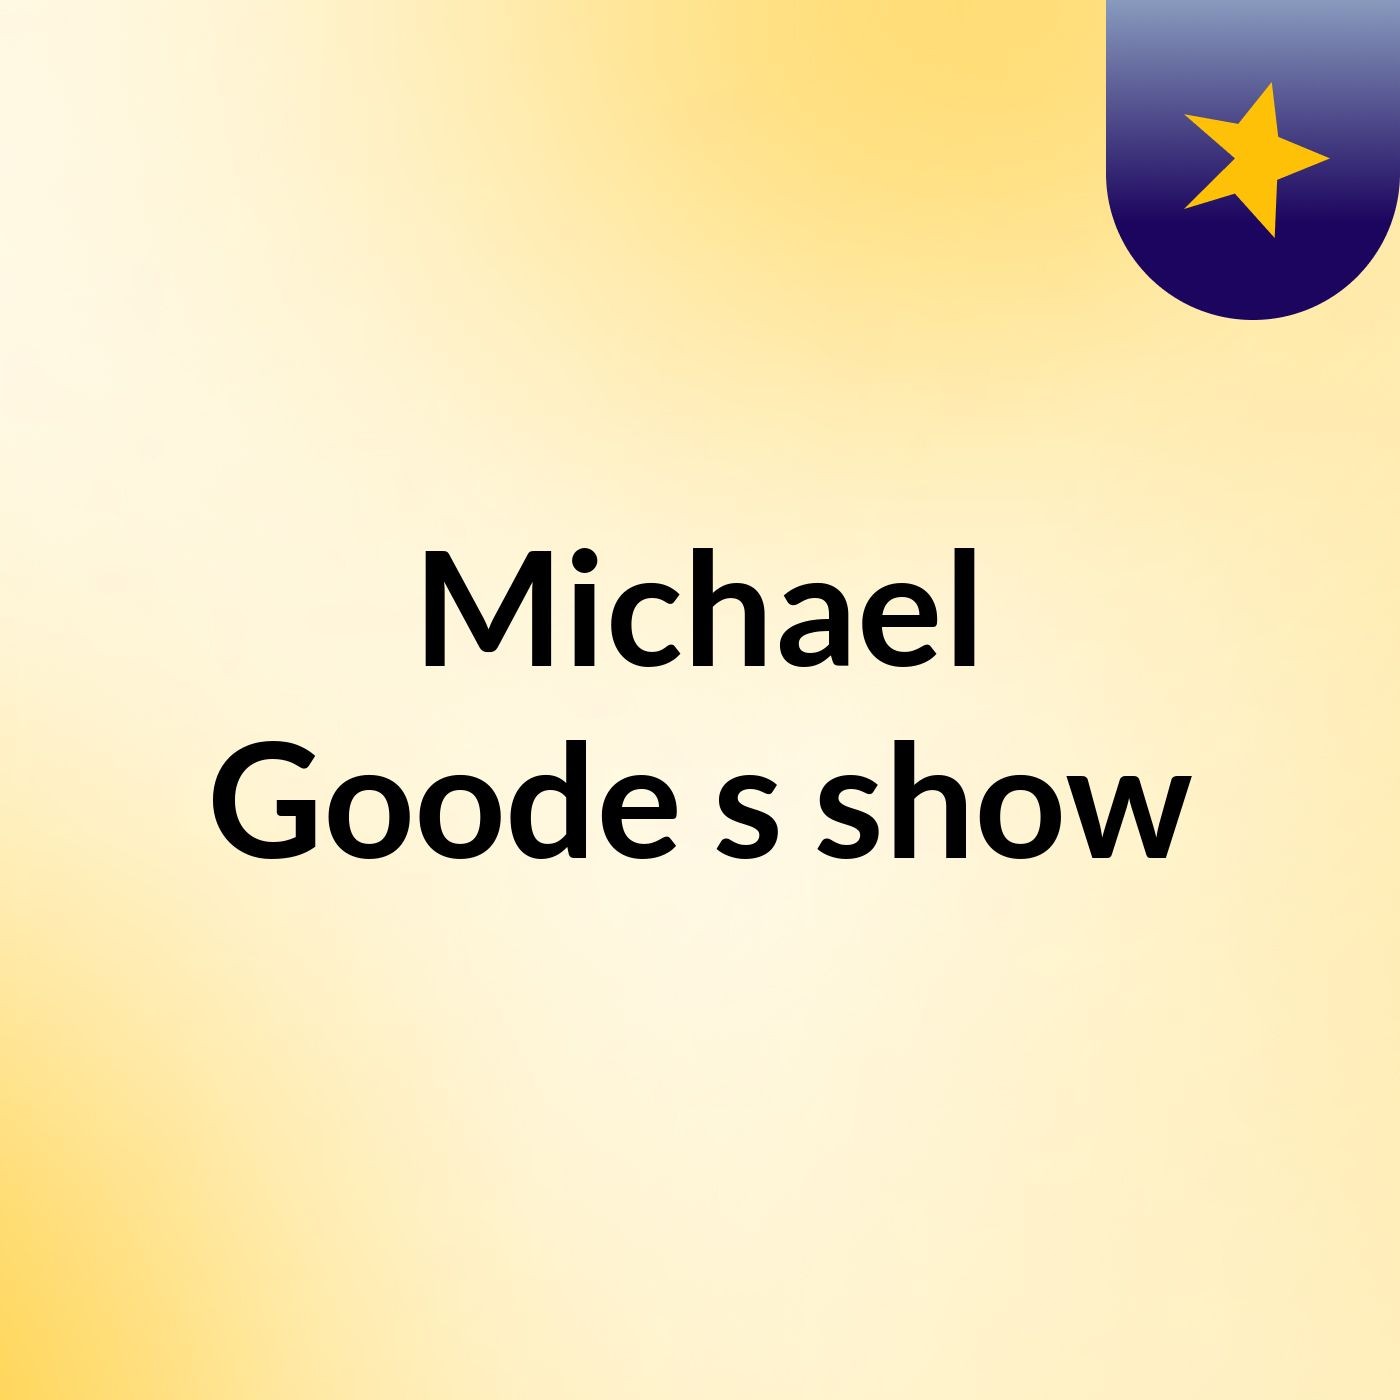 Episode 3 - Michael Goode's show